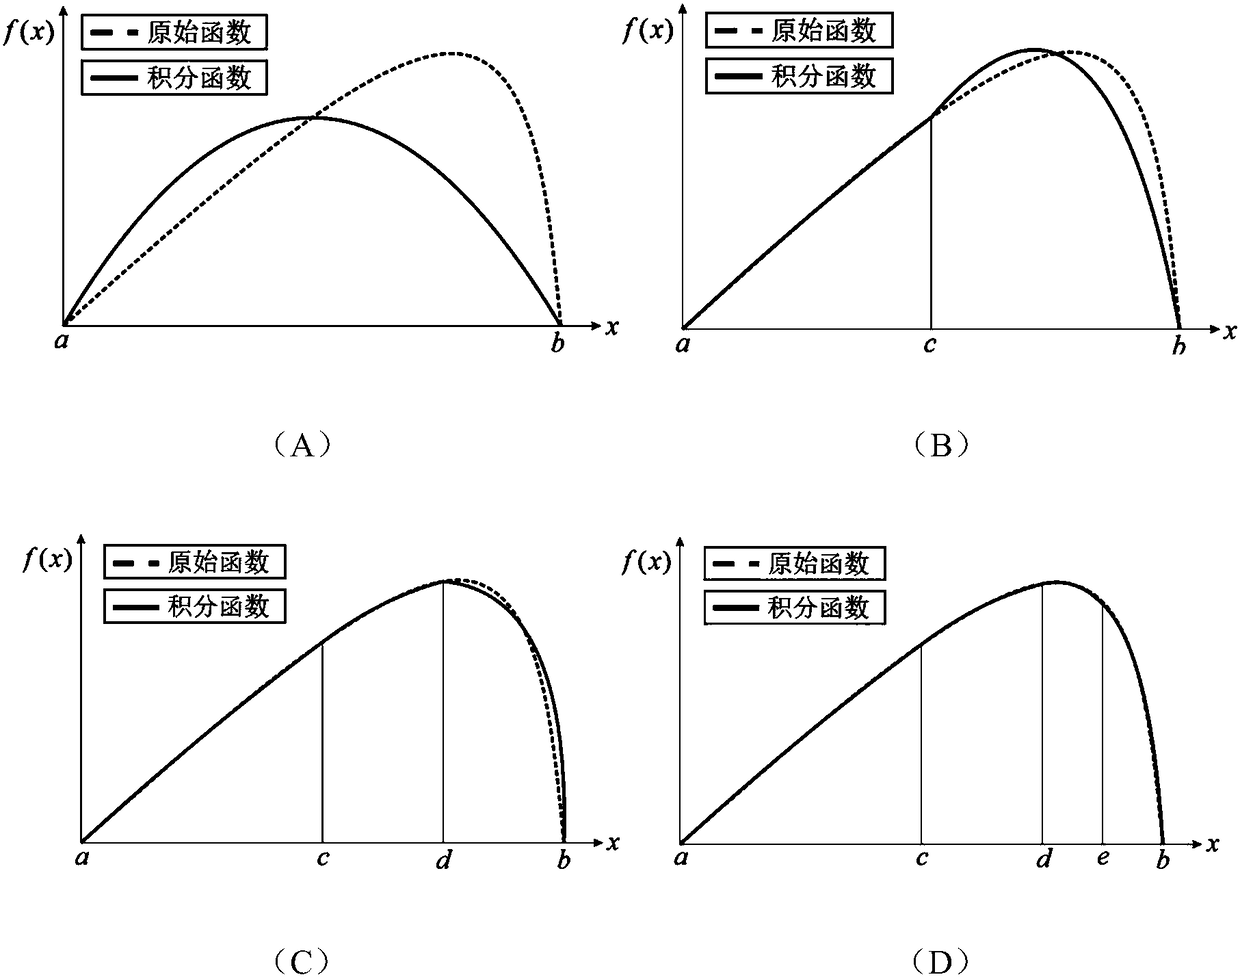 A Method for Determining Optimal Structure Size Based on Hypervolume Iterative Global Optimization Algorithm